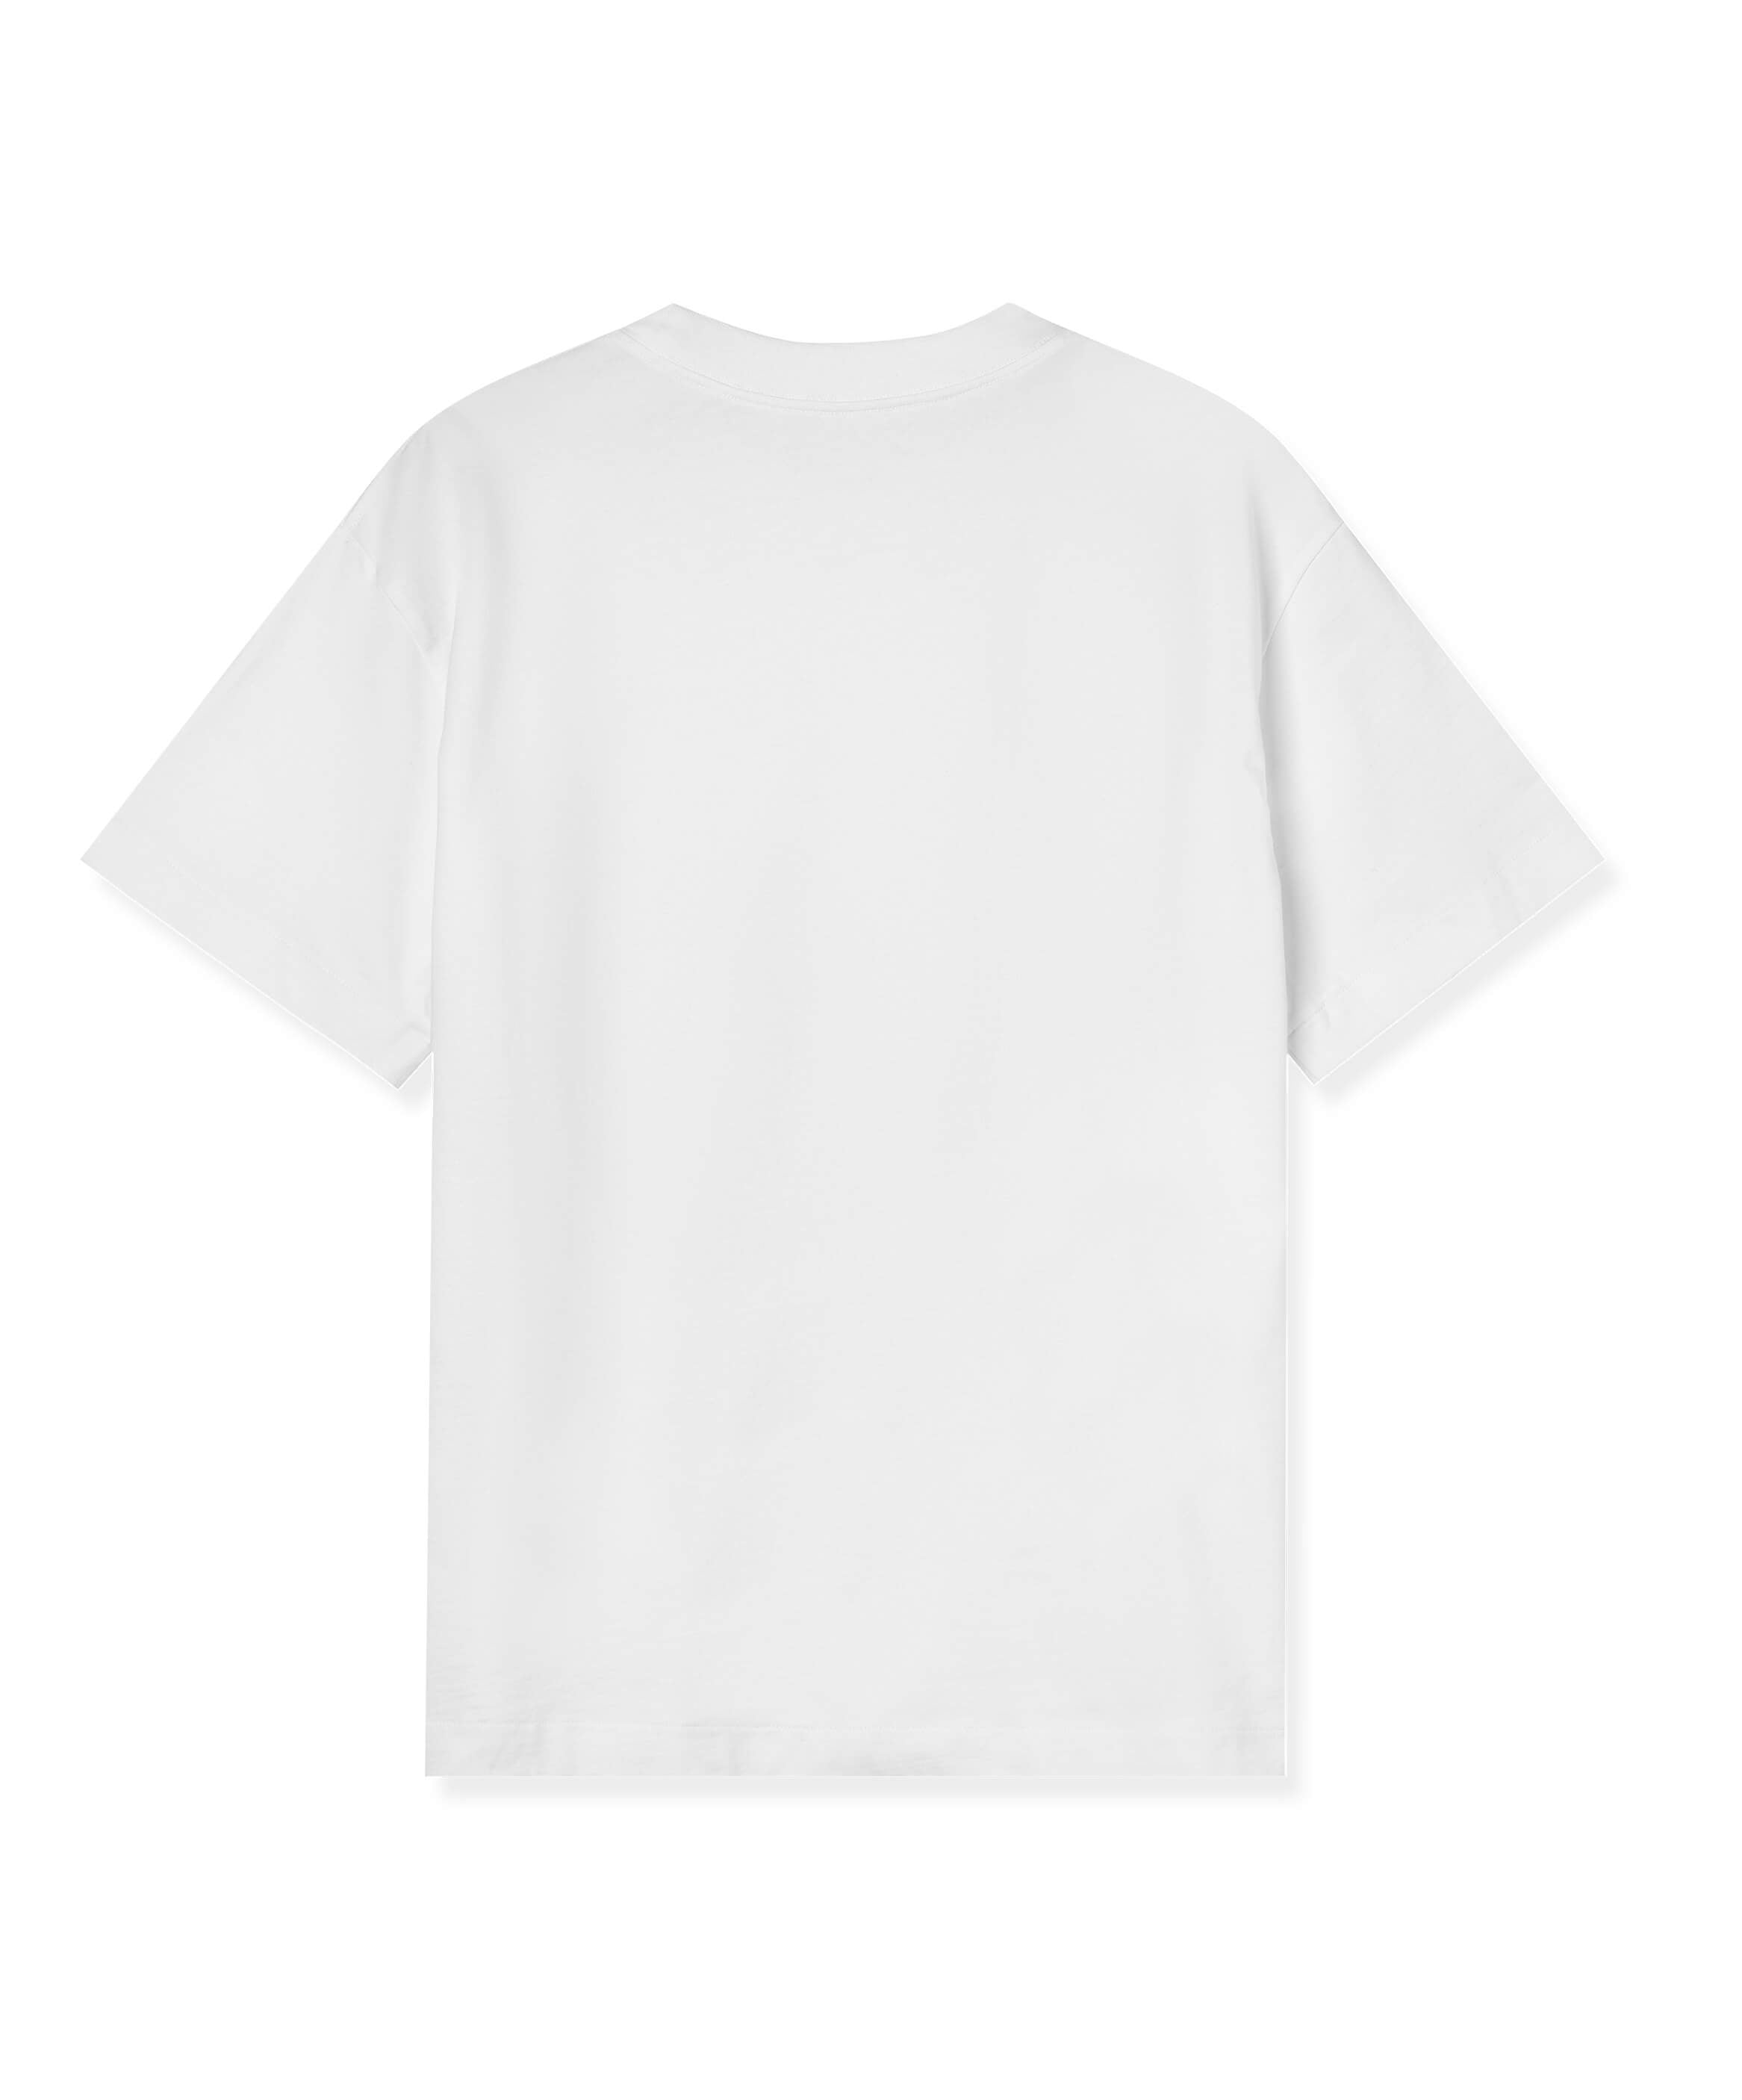 Self-Care Box T-Shirt (Female)